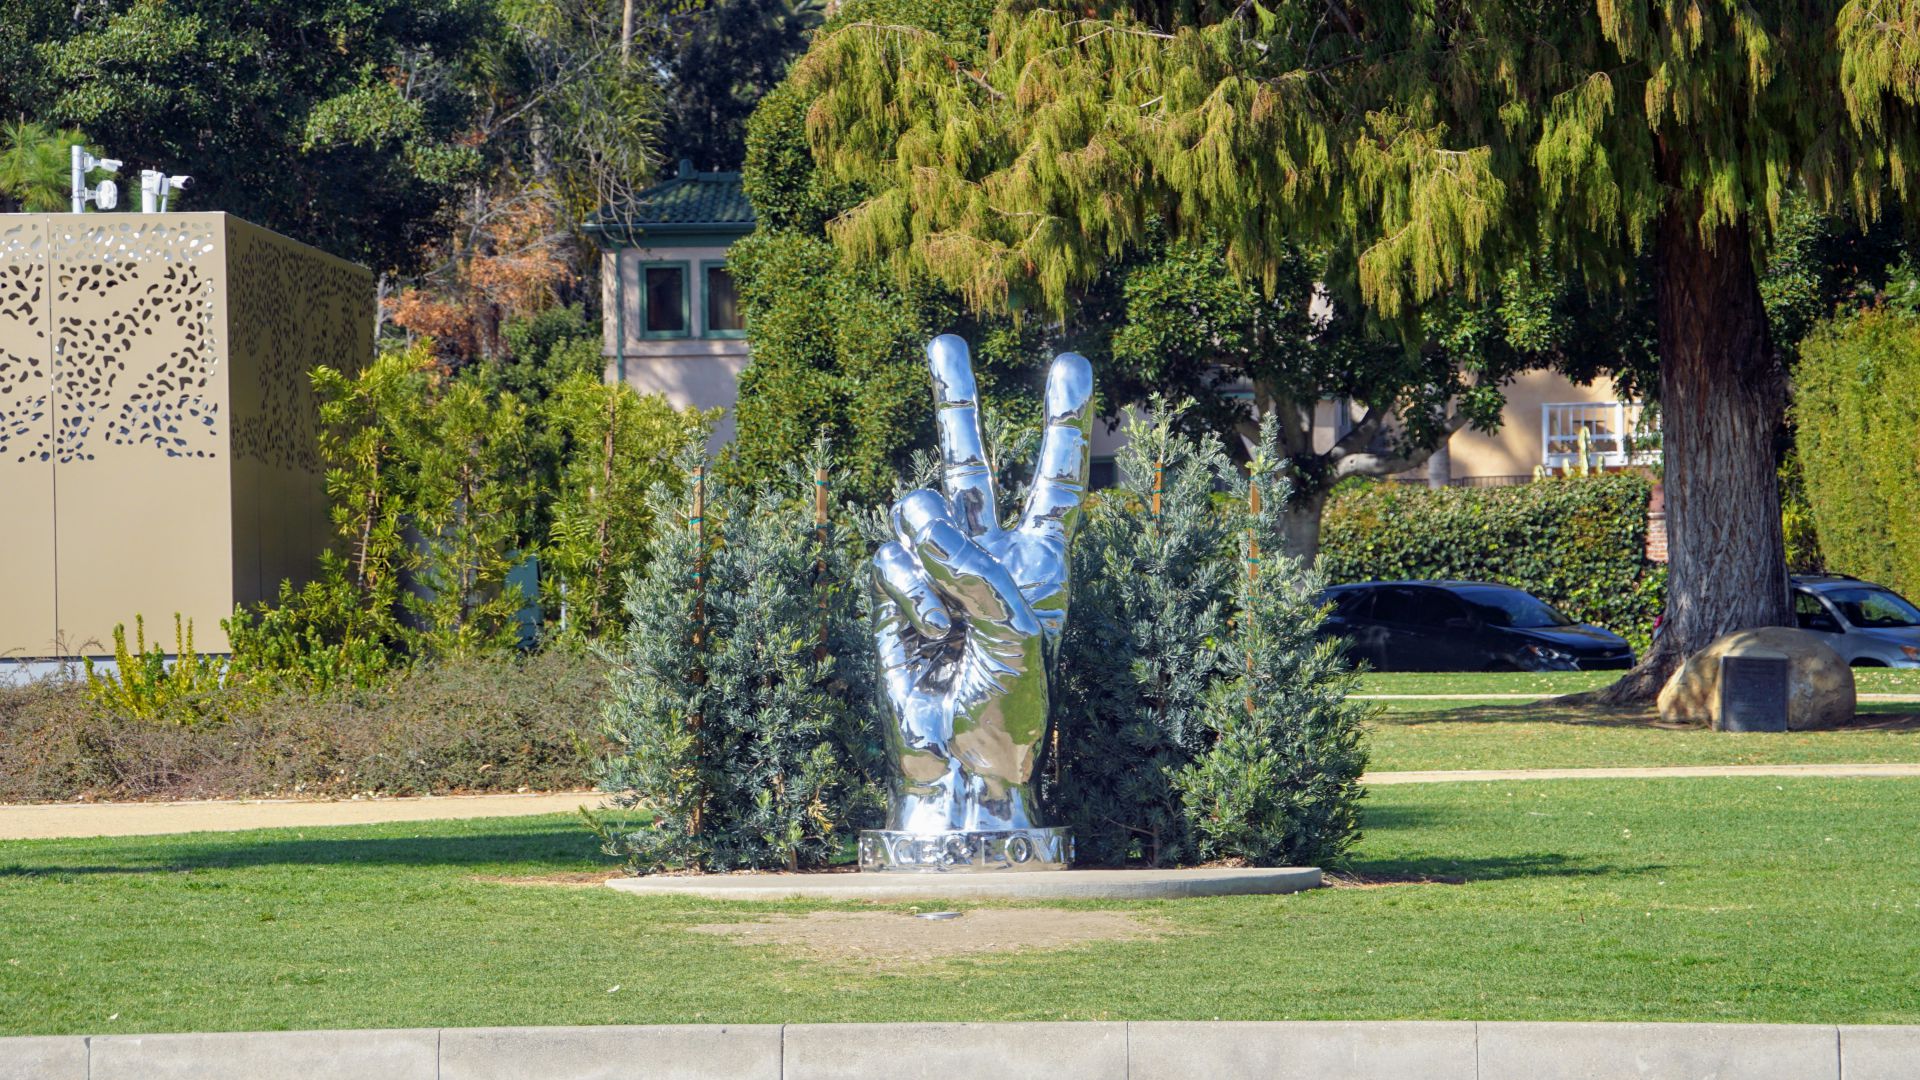 Beverly Hills, CA - Beverly Gardens Park